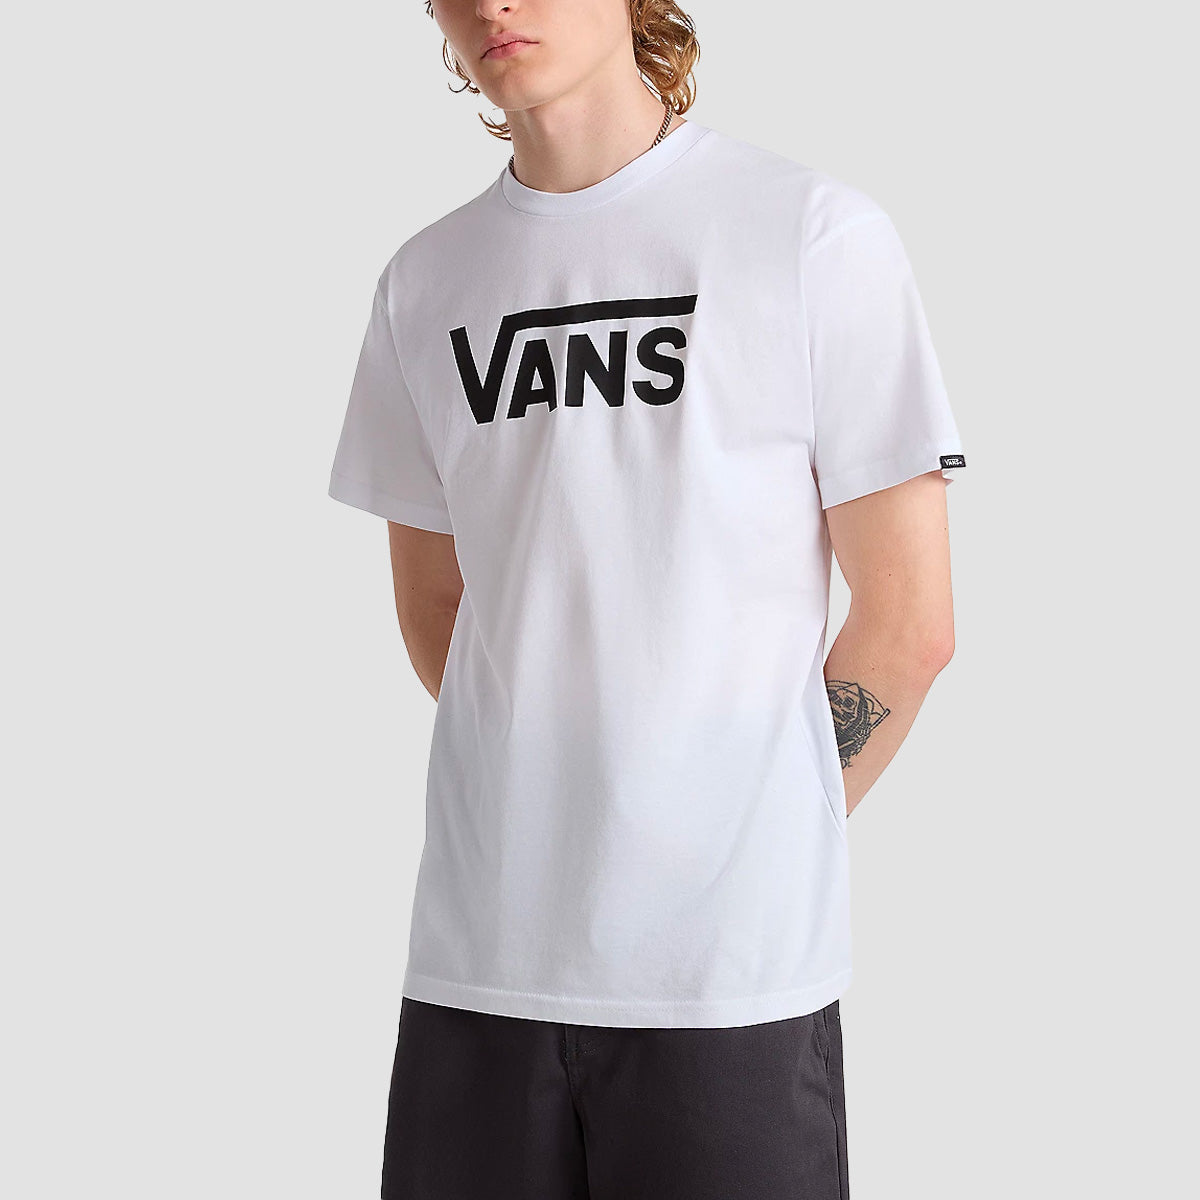 Vans Classic T-Shirt White/Black